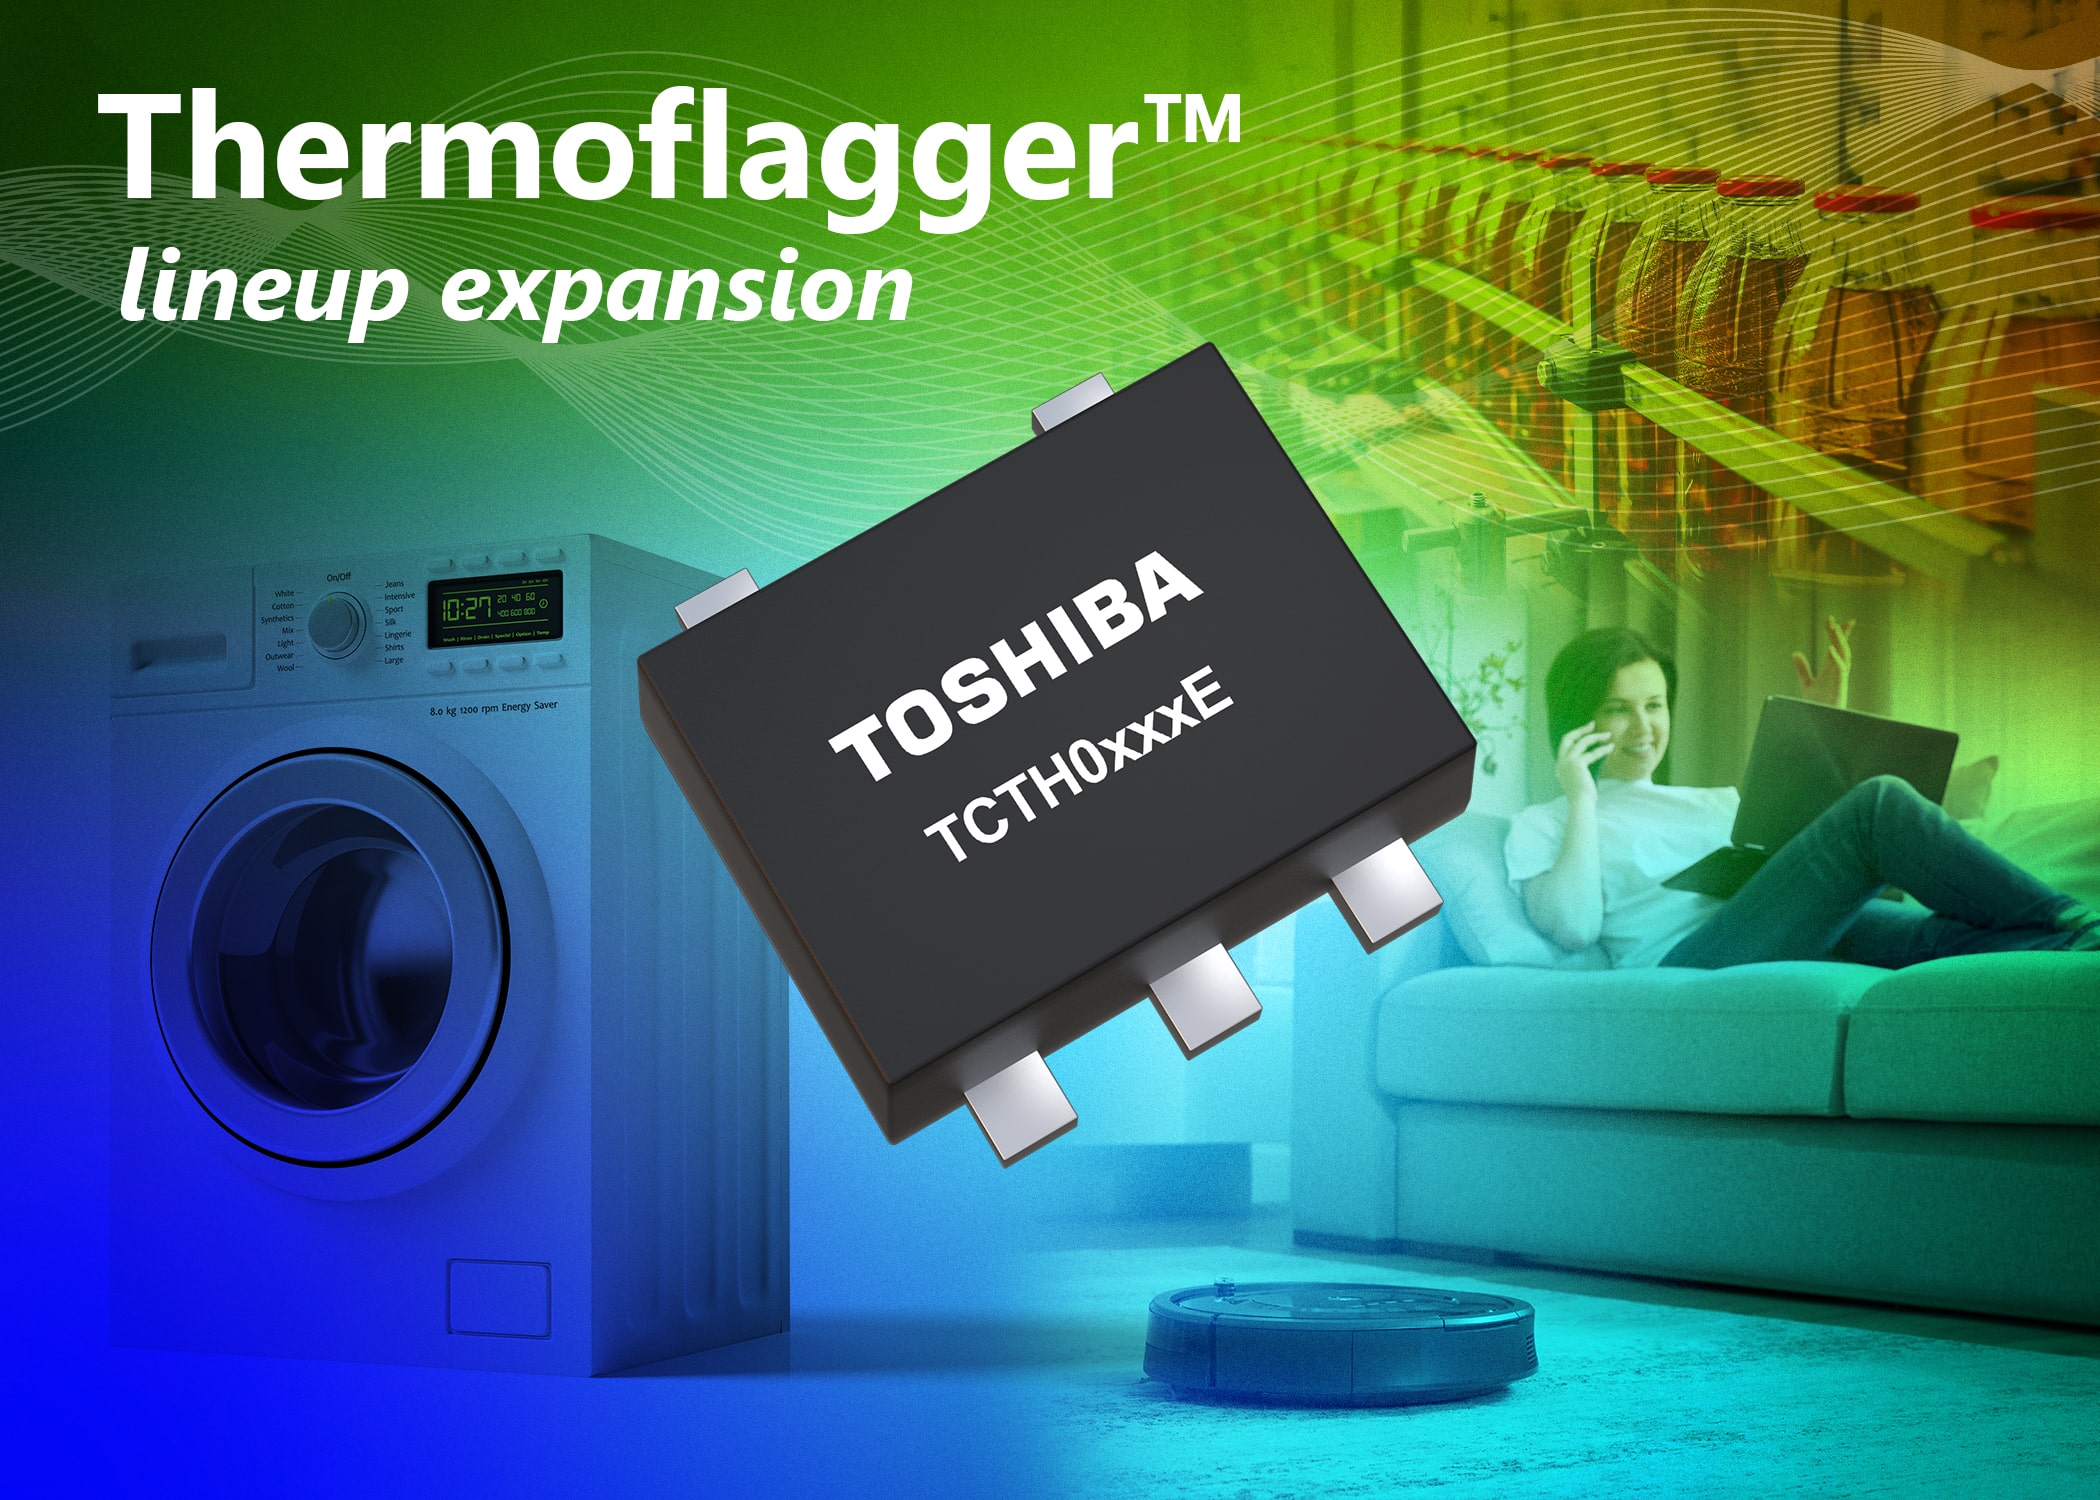 Toshiba expands range of Thermoflagger™ temperature monitoring ICs